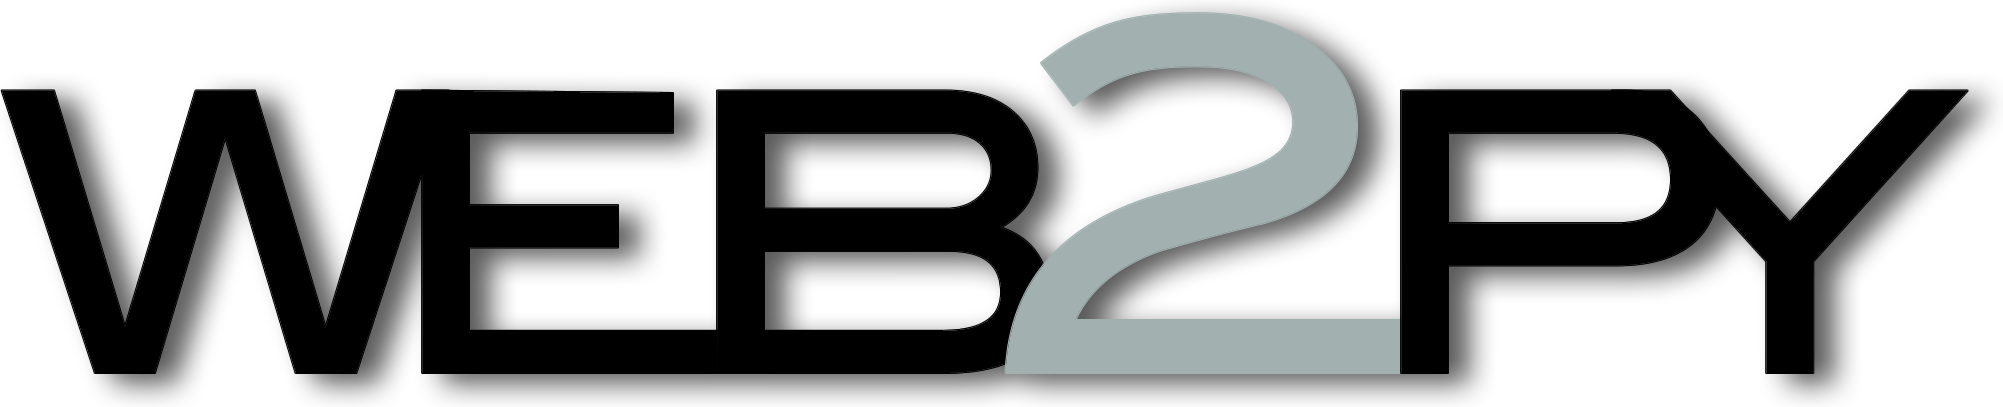 The web2py logo